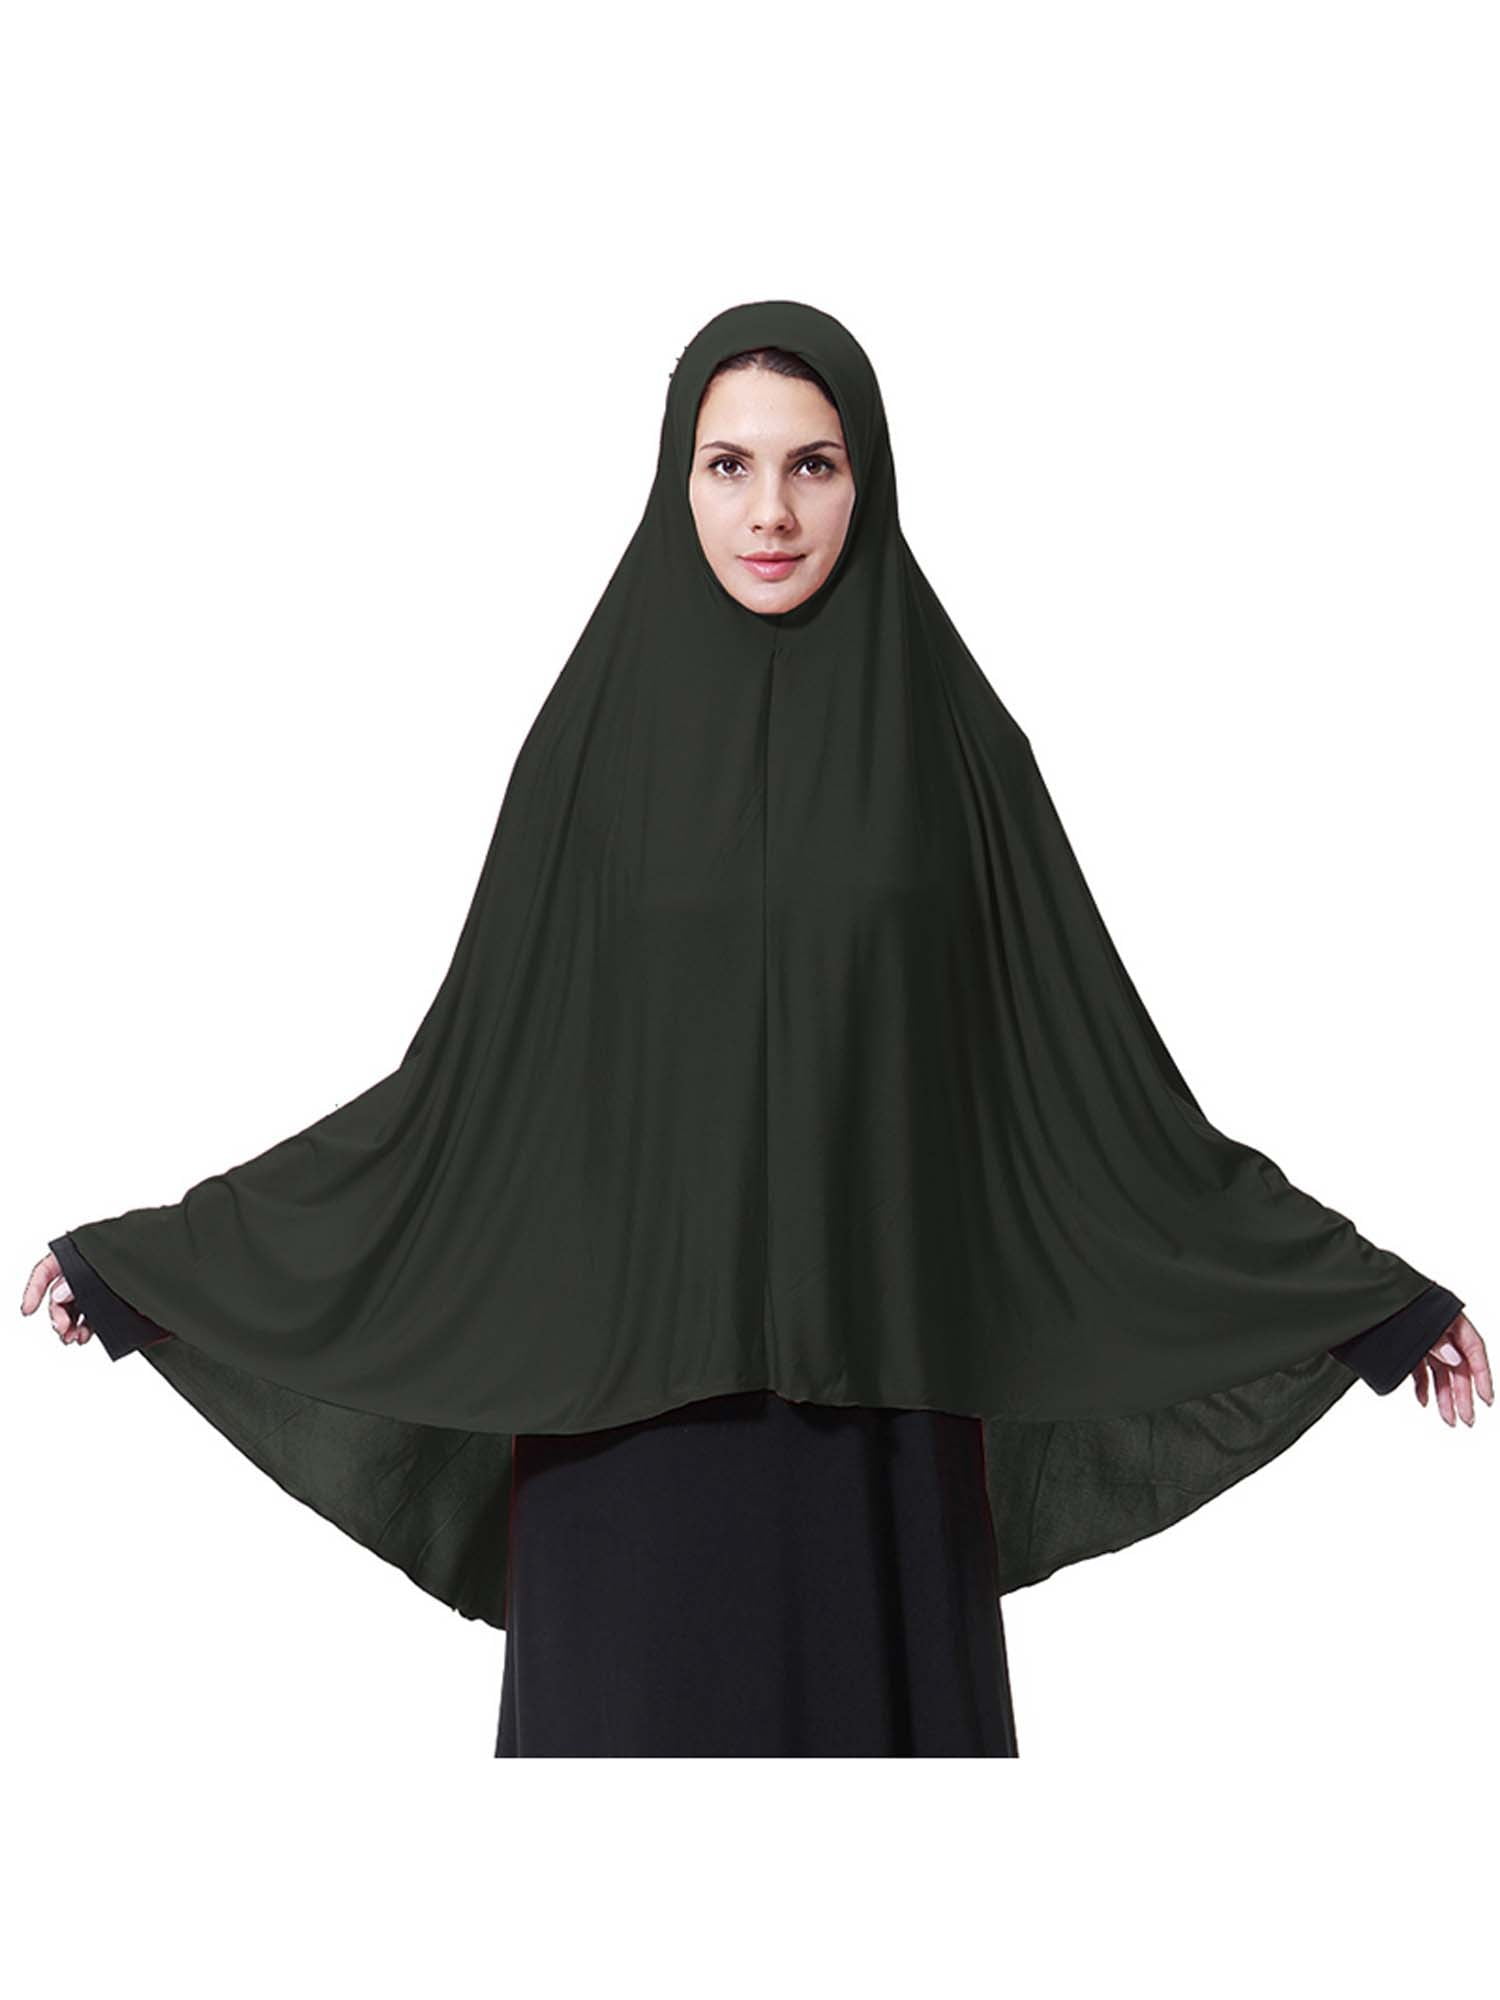 Lallc - Arab Muslim Women Prayer Long Hijab Scarf Shawl Overhead Large ...